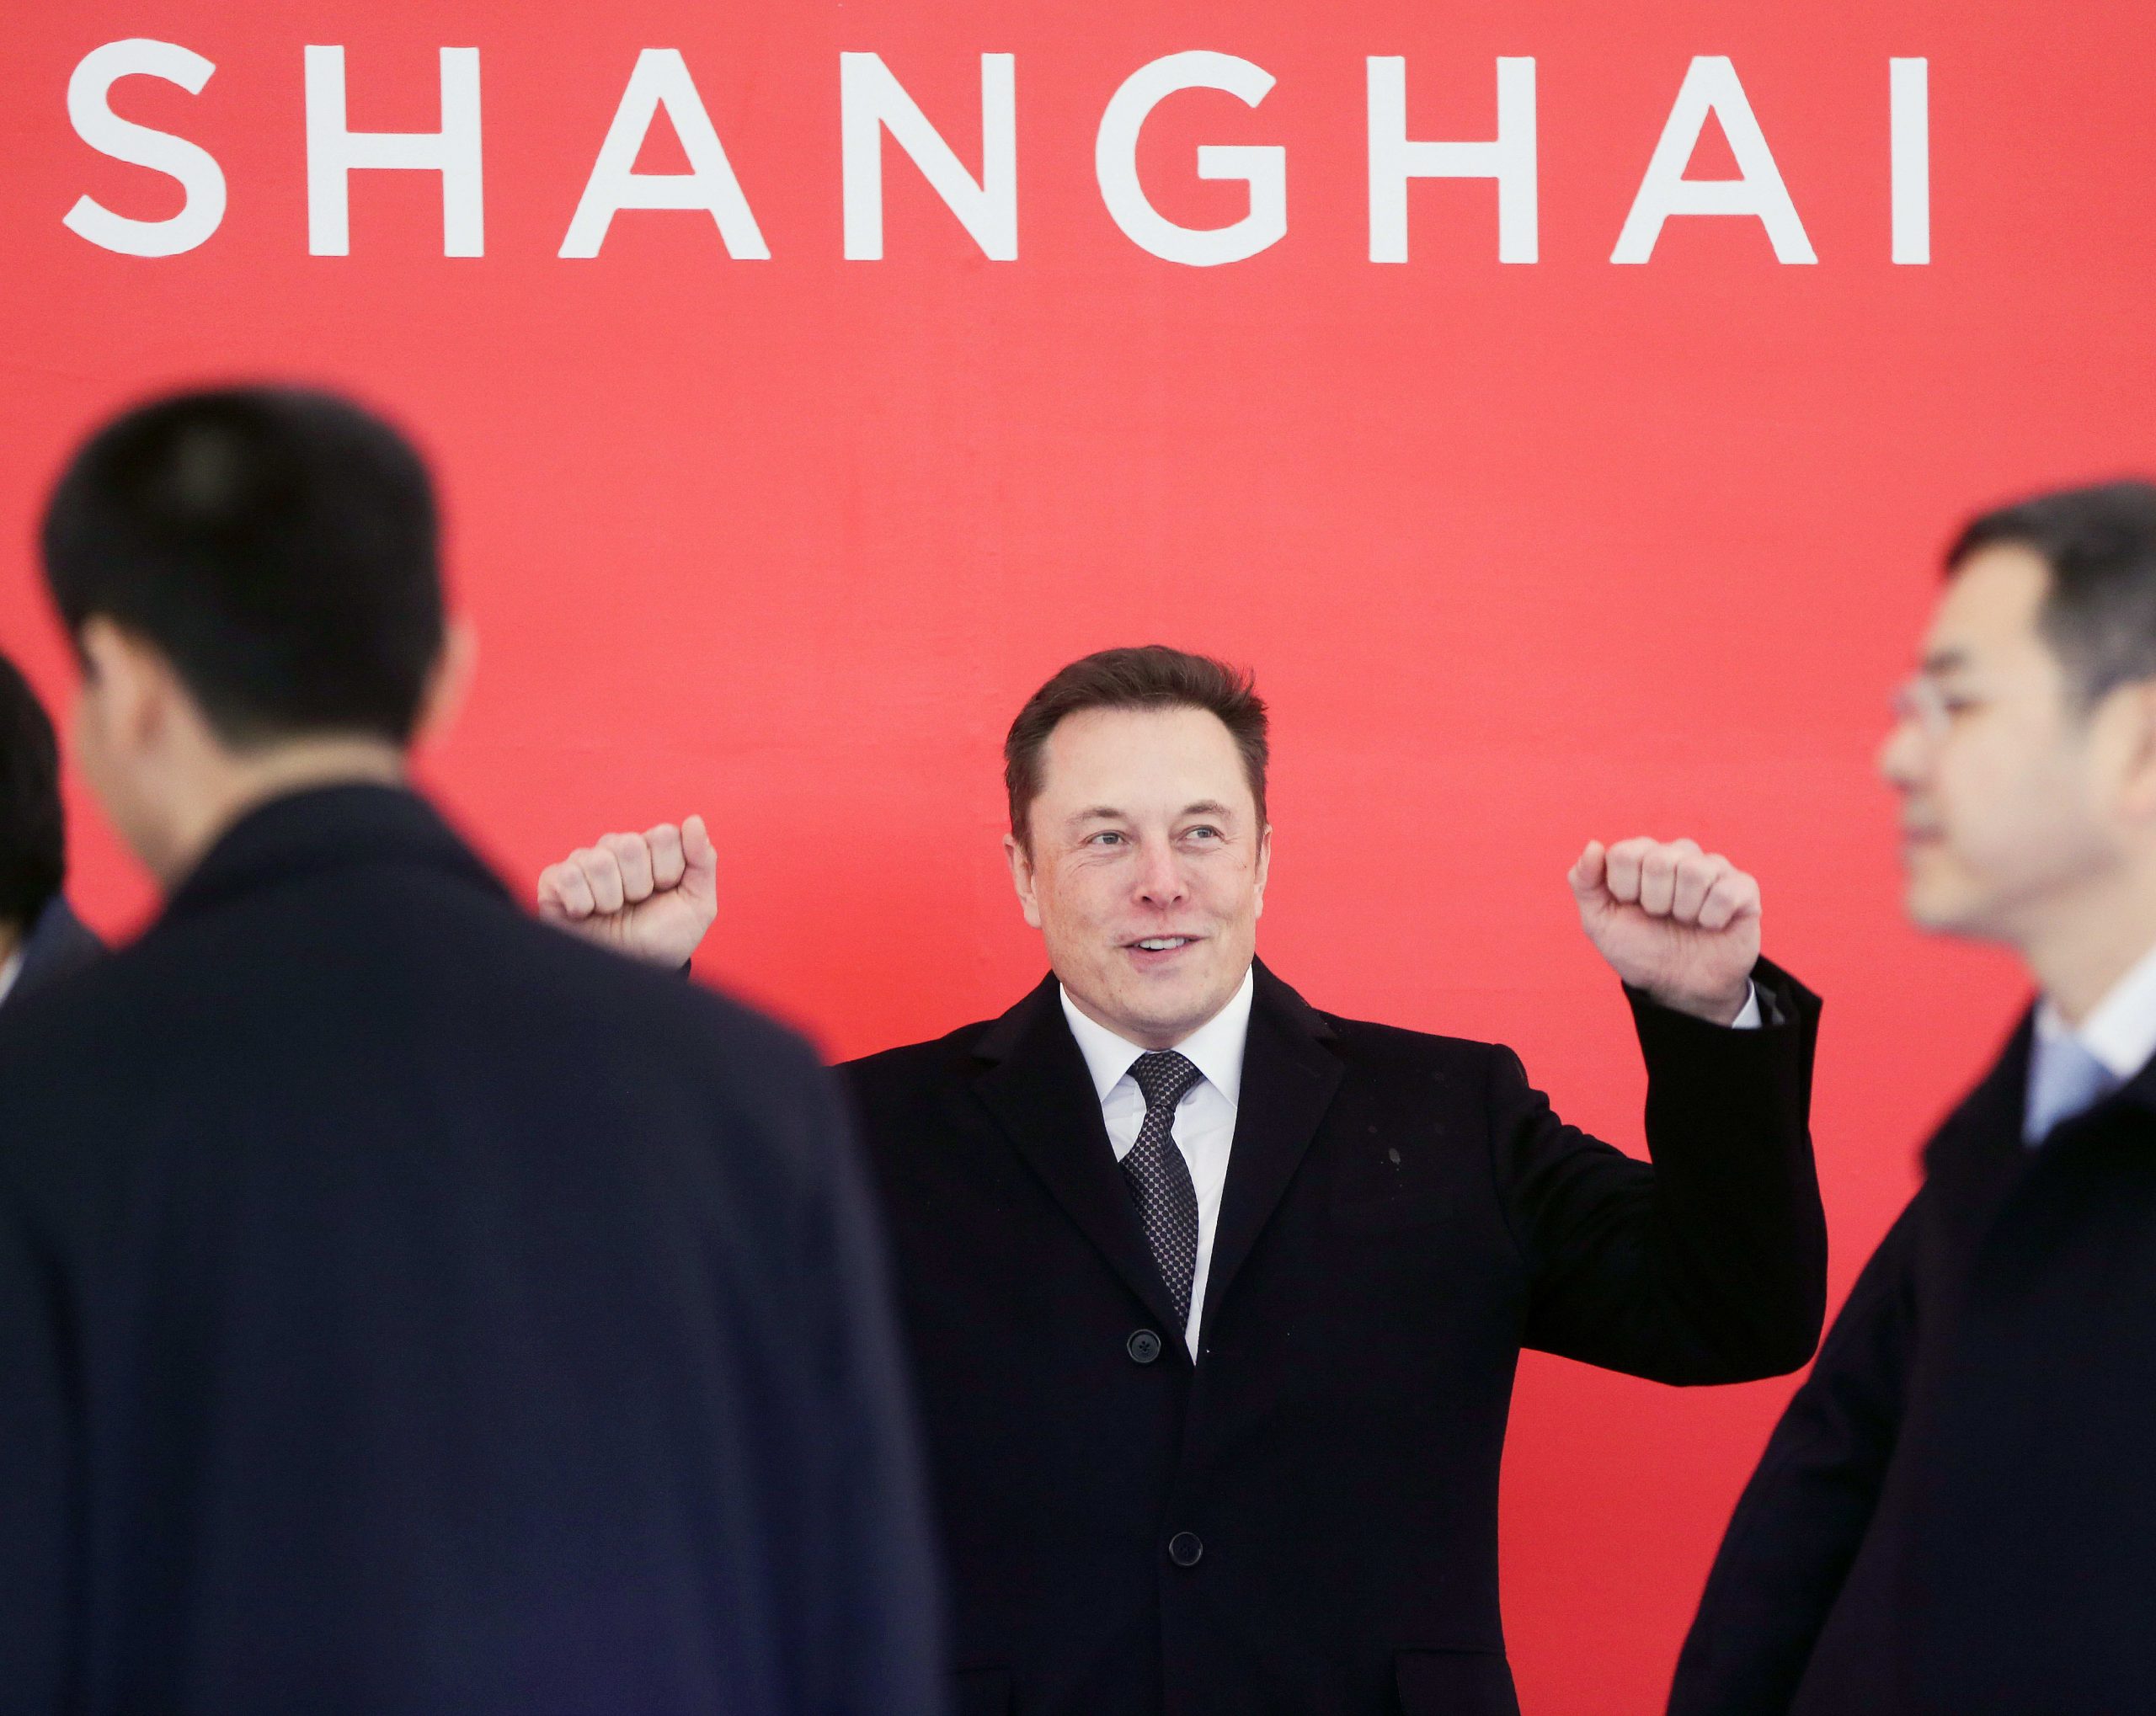 Teslas inbuilt China really useful for presidency subsidies report says